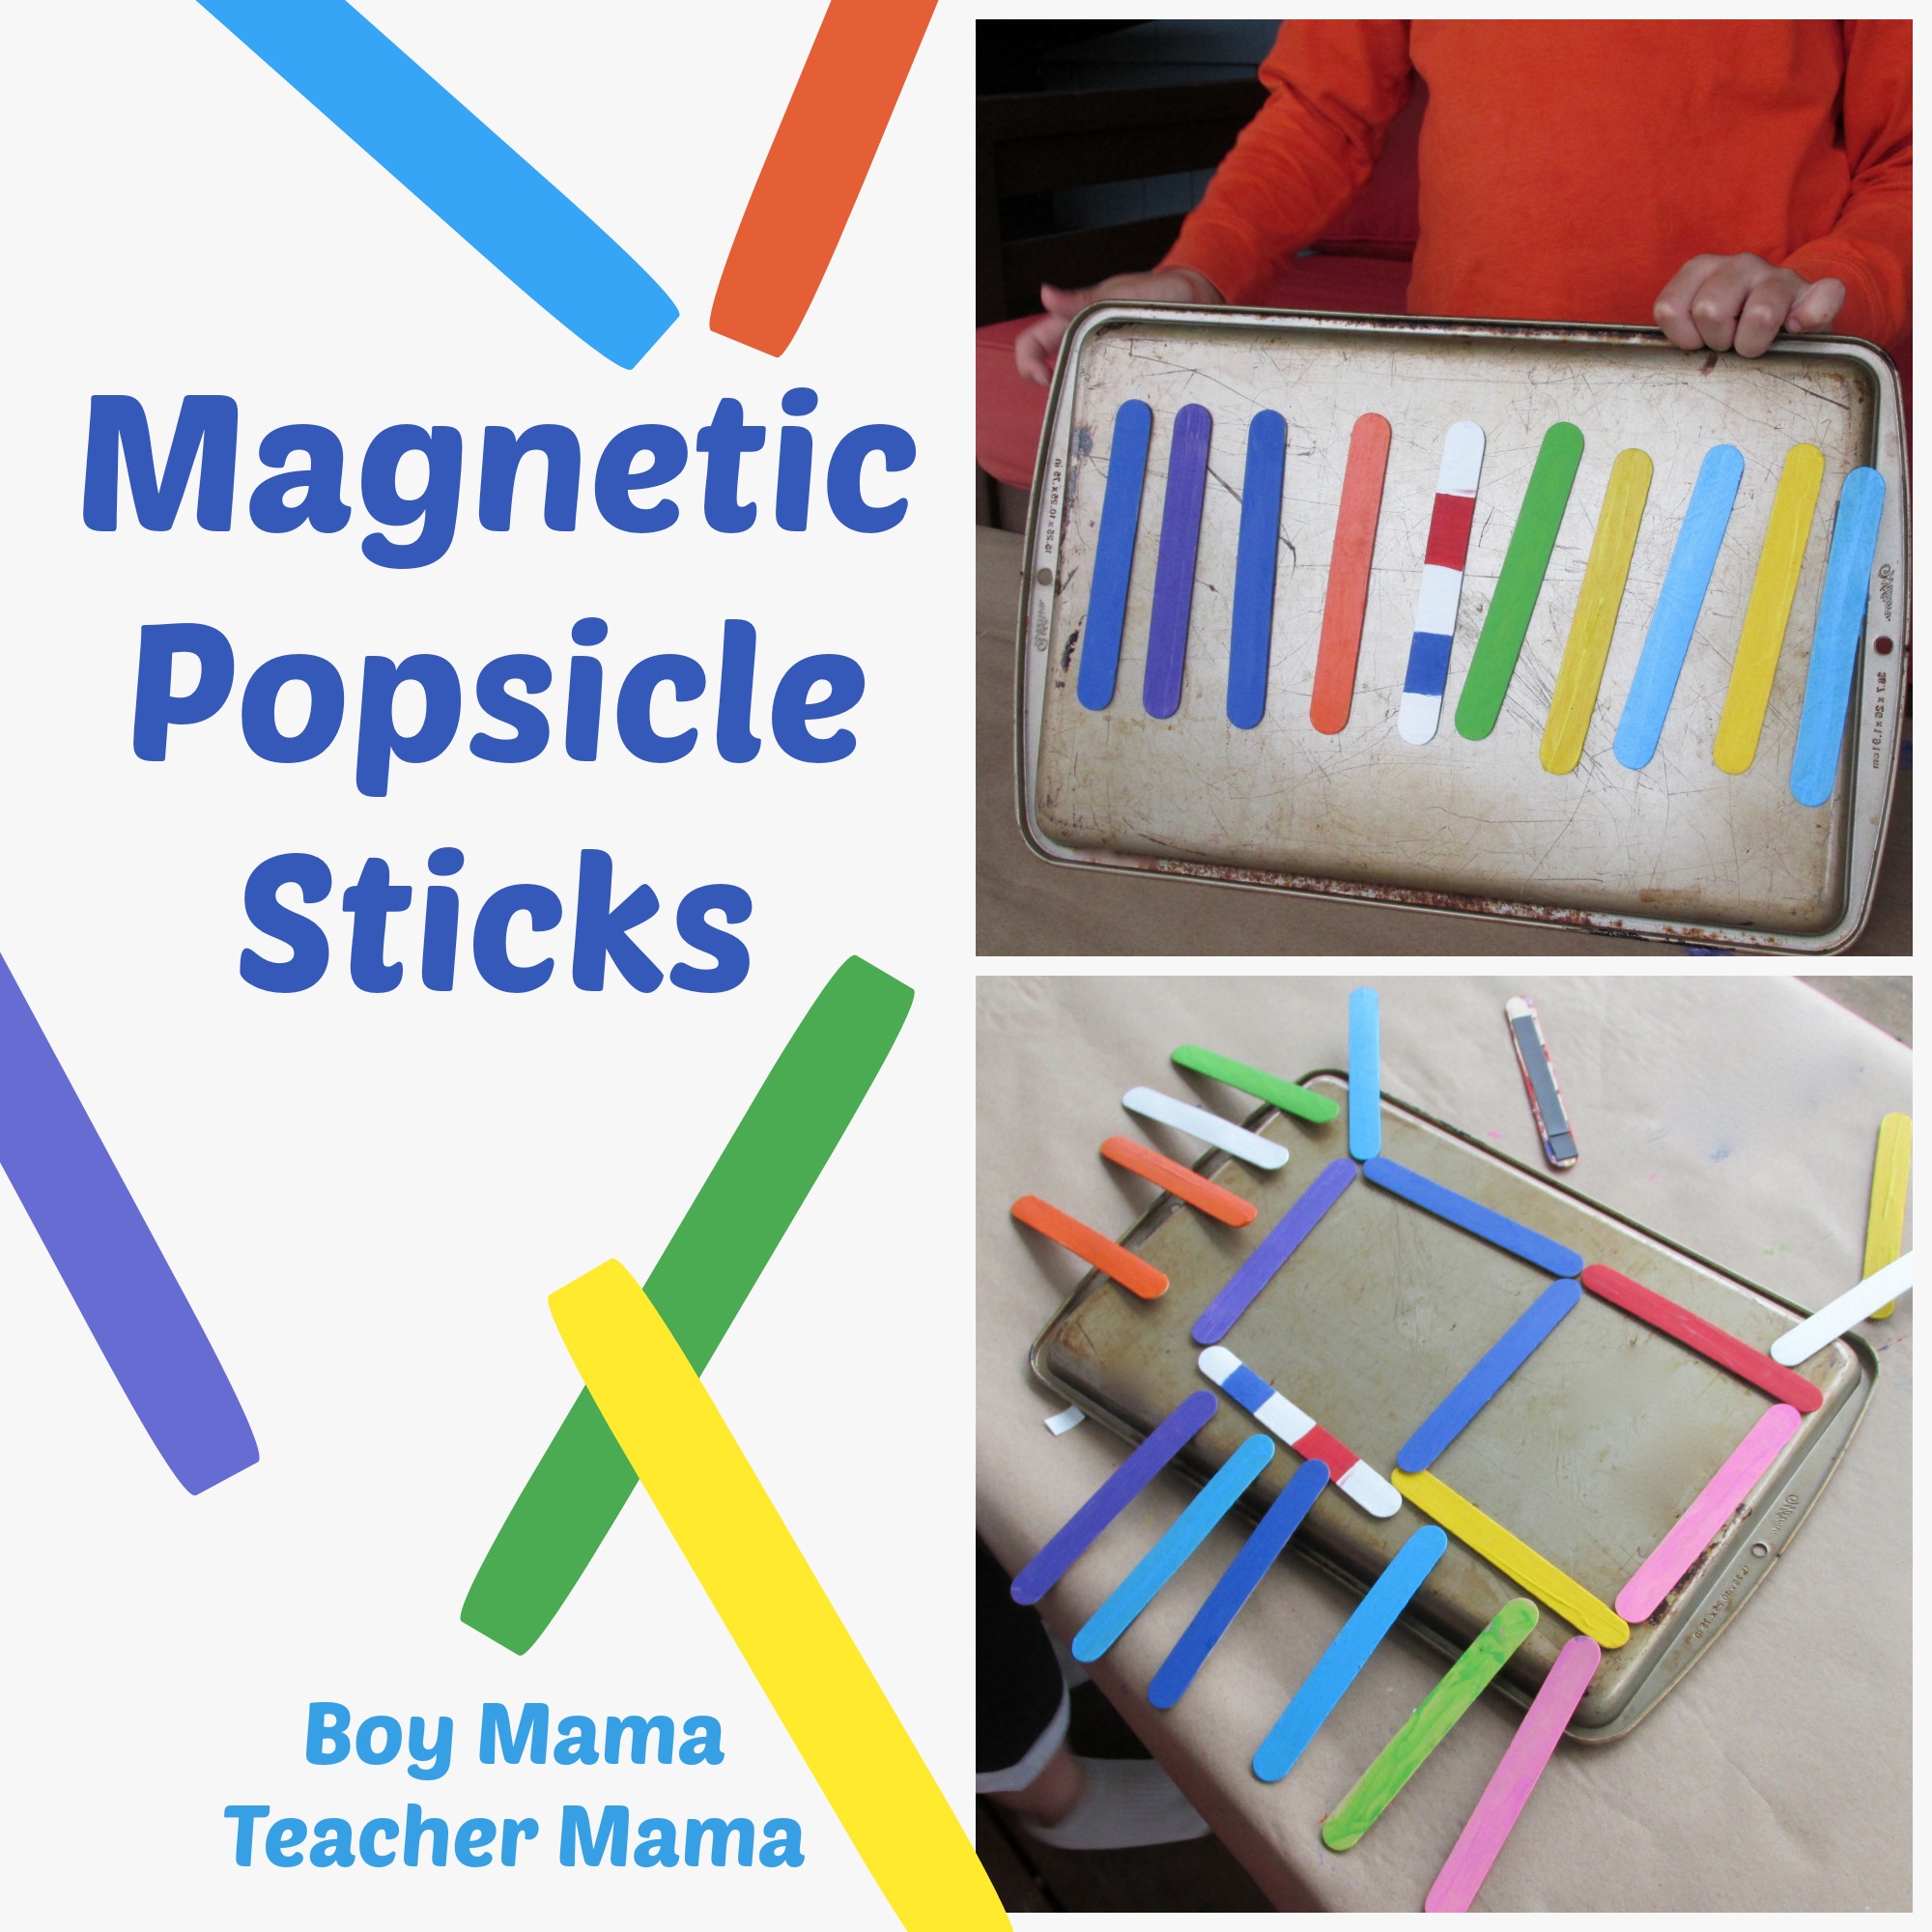 Boy Mama: Magnetic Popsicle Sticks - Boy Mama Teacher Mama